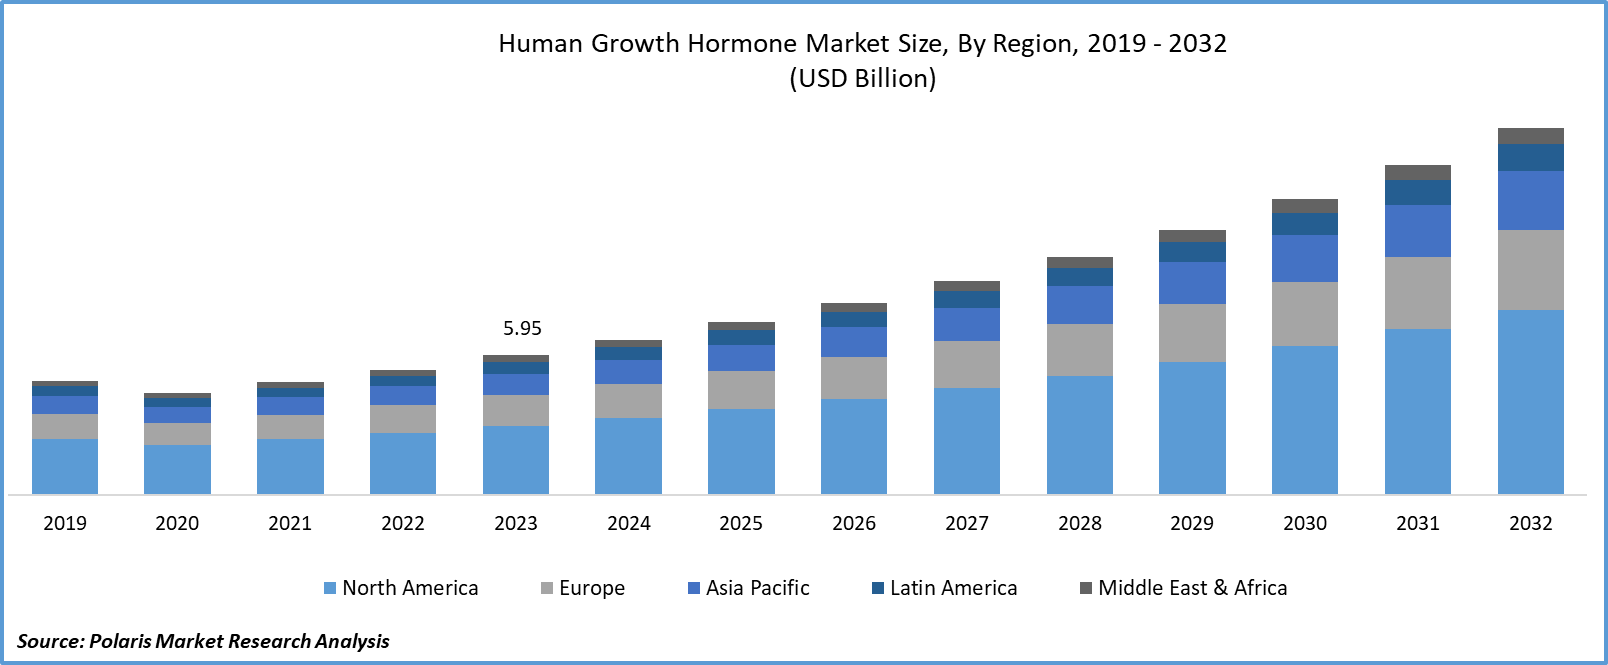 Human Growth Hormone Market Size